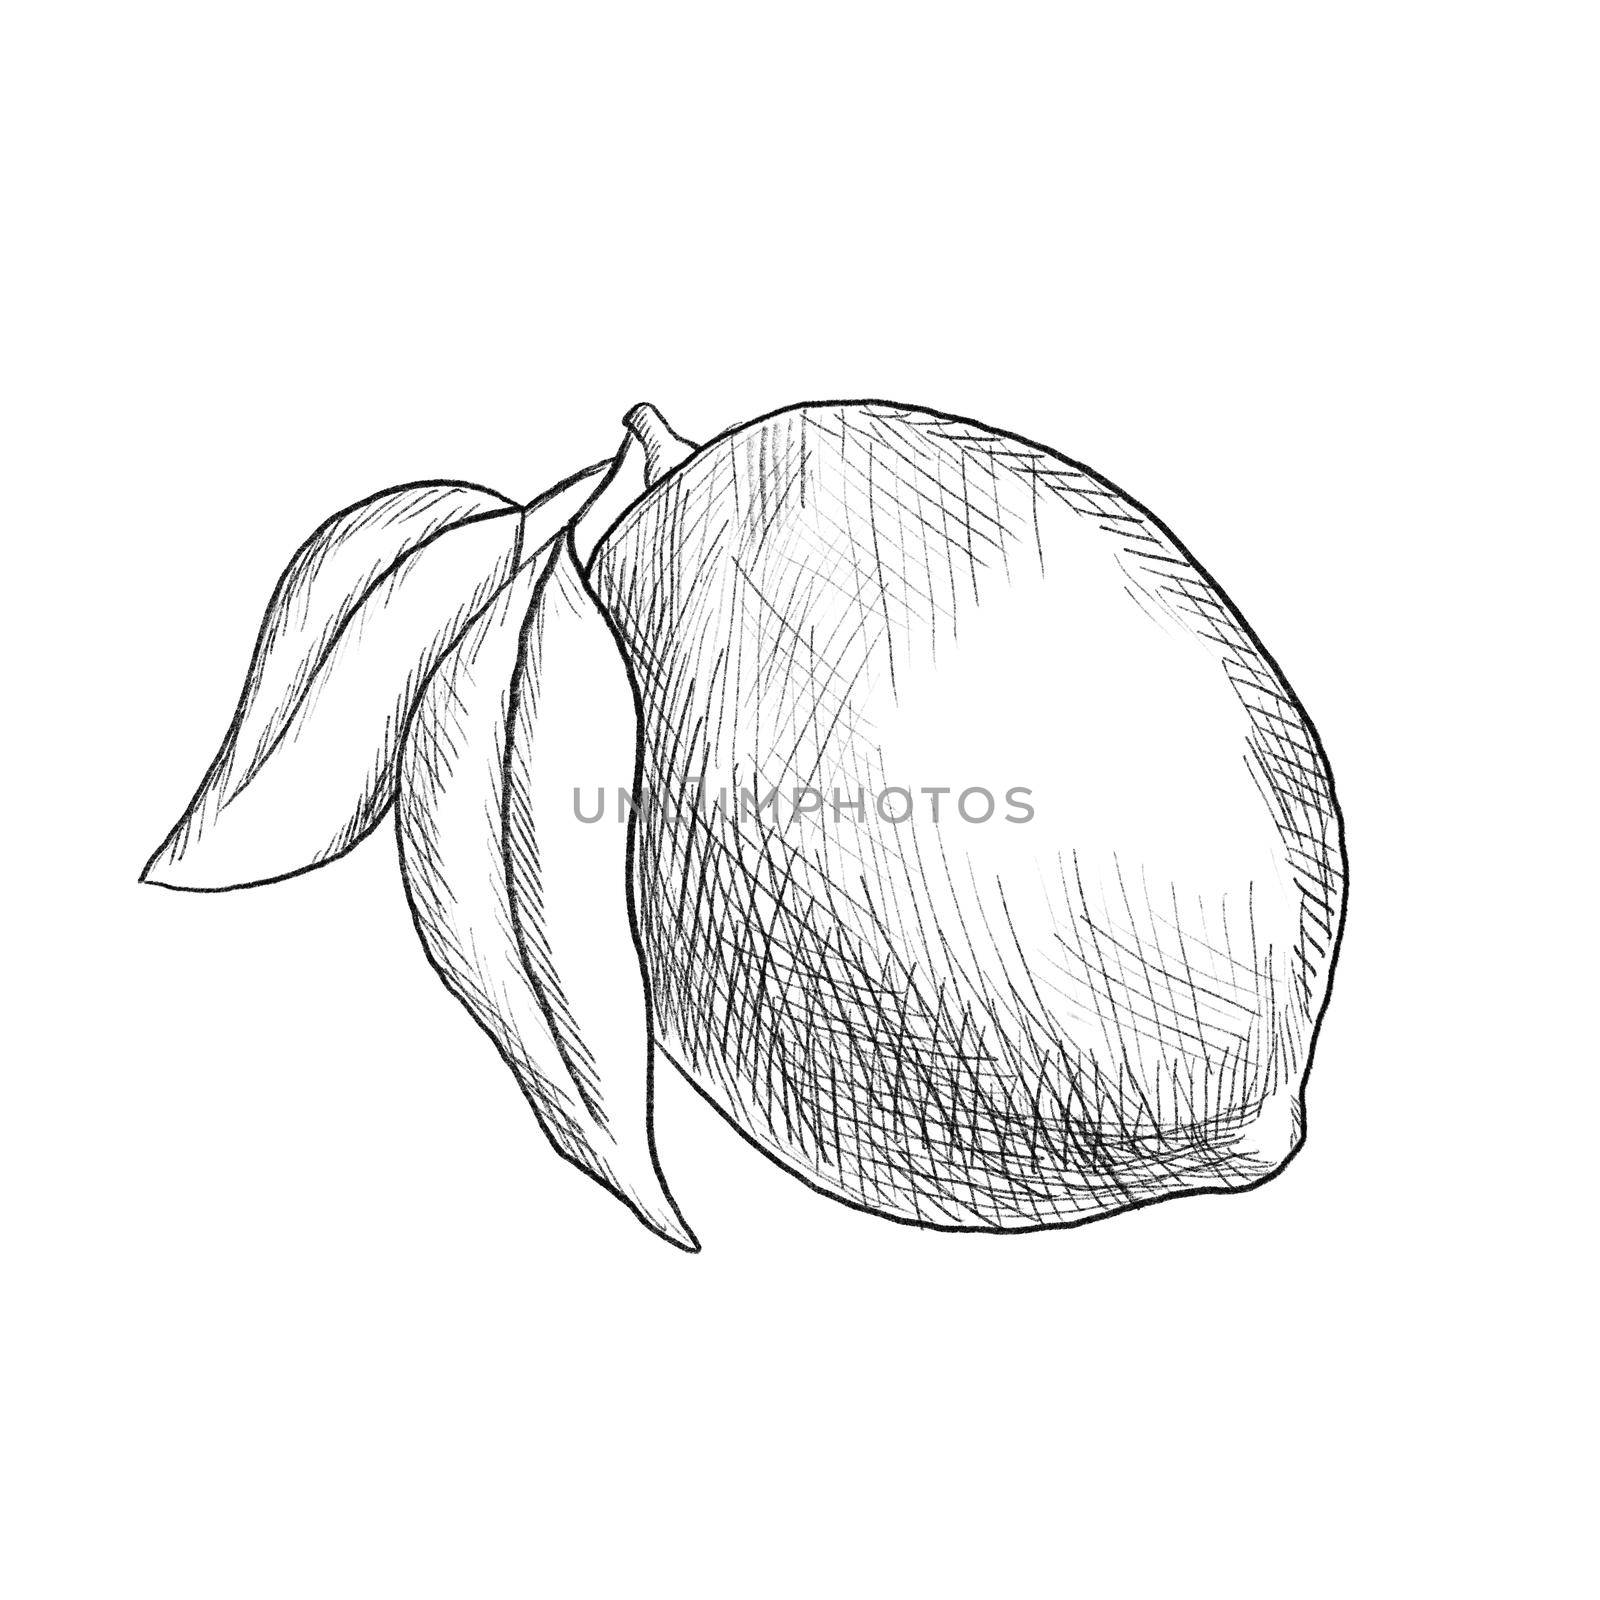 Lemon sketch. Monochrome Illustration isolated on white. Citrus fruit with leaves by ElenaPlatova